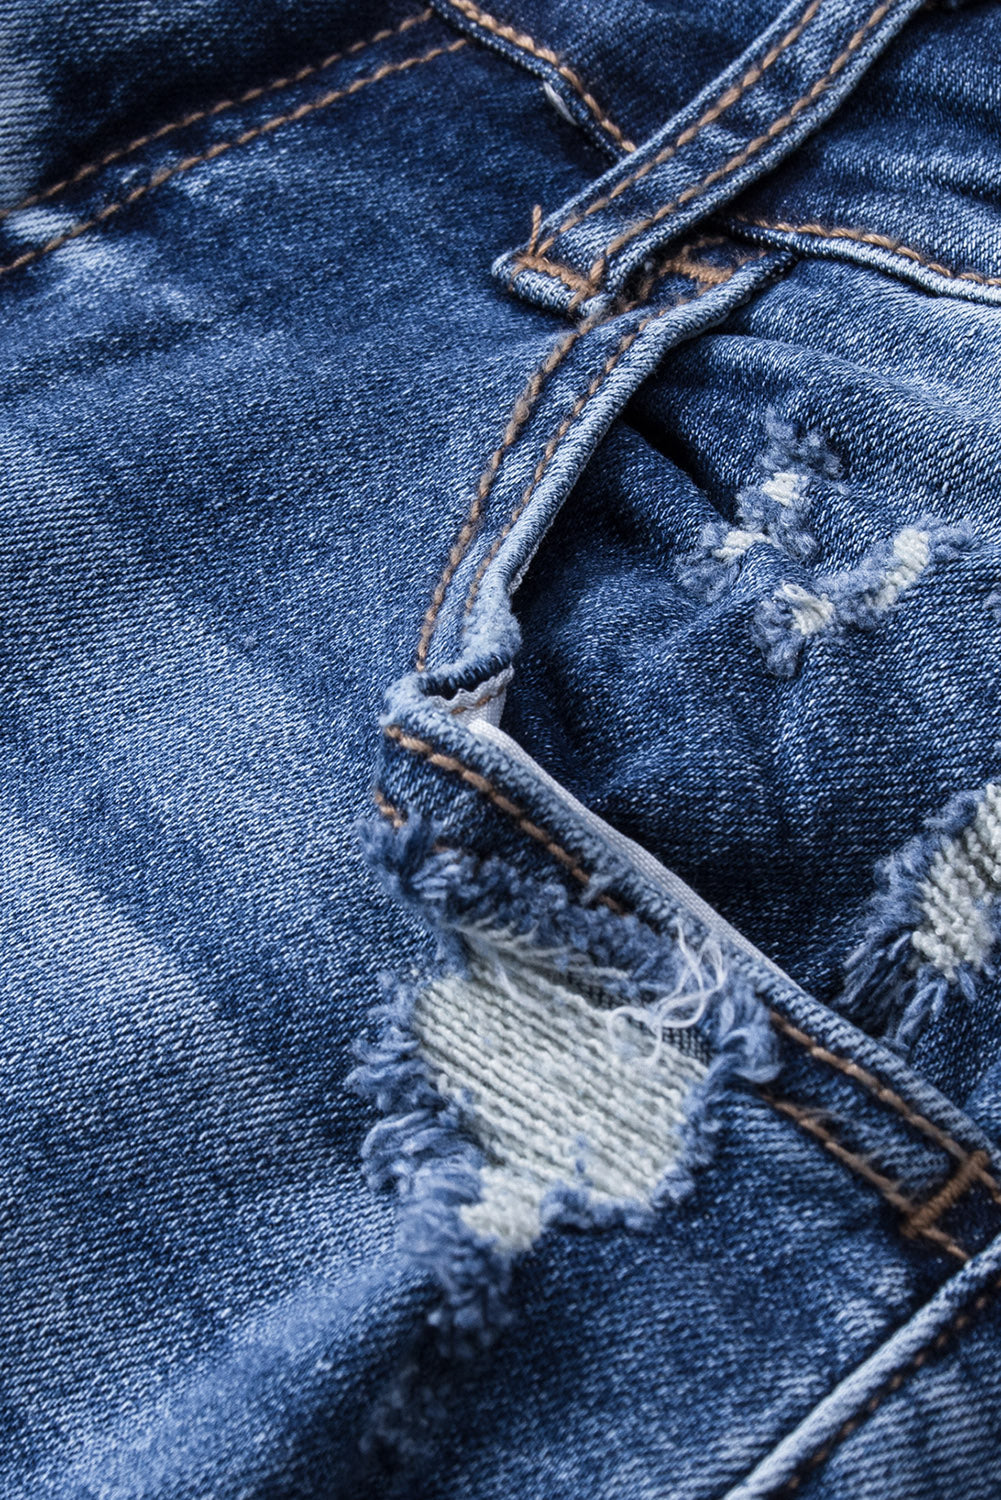 Blue Distressed Flare Jeans Jeans JT's Designer Fashion